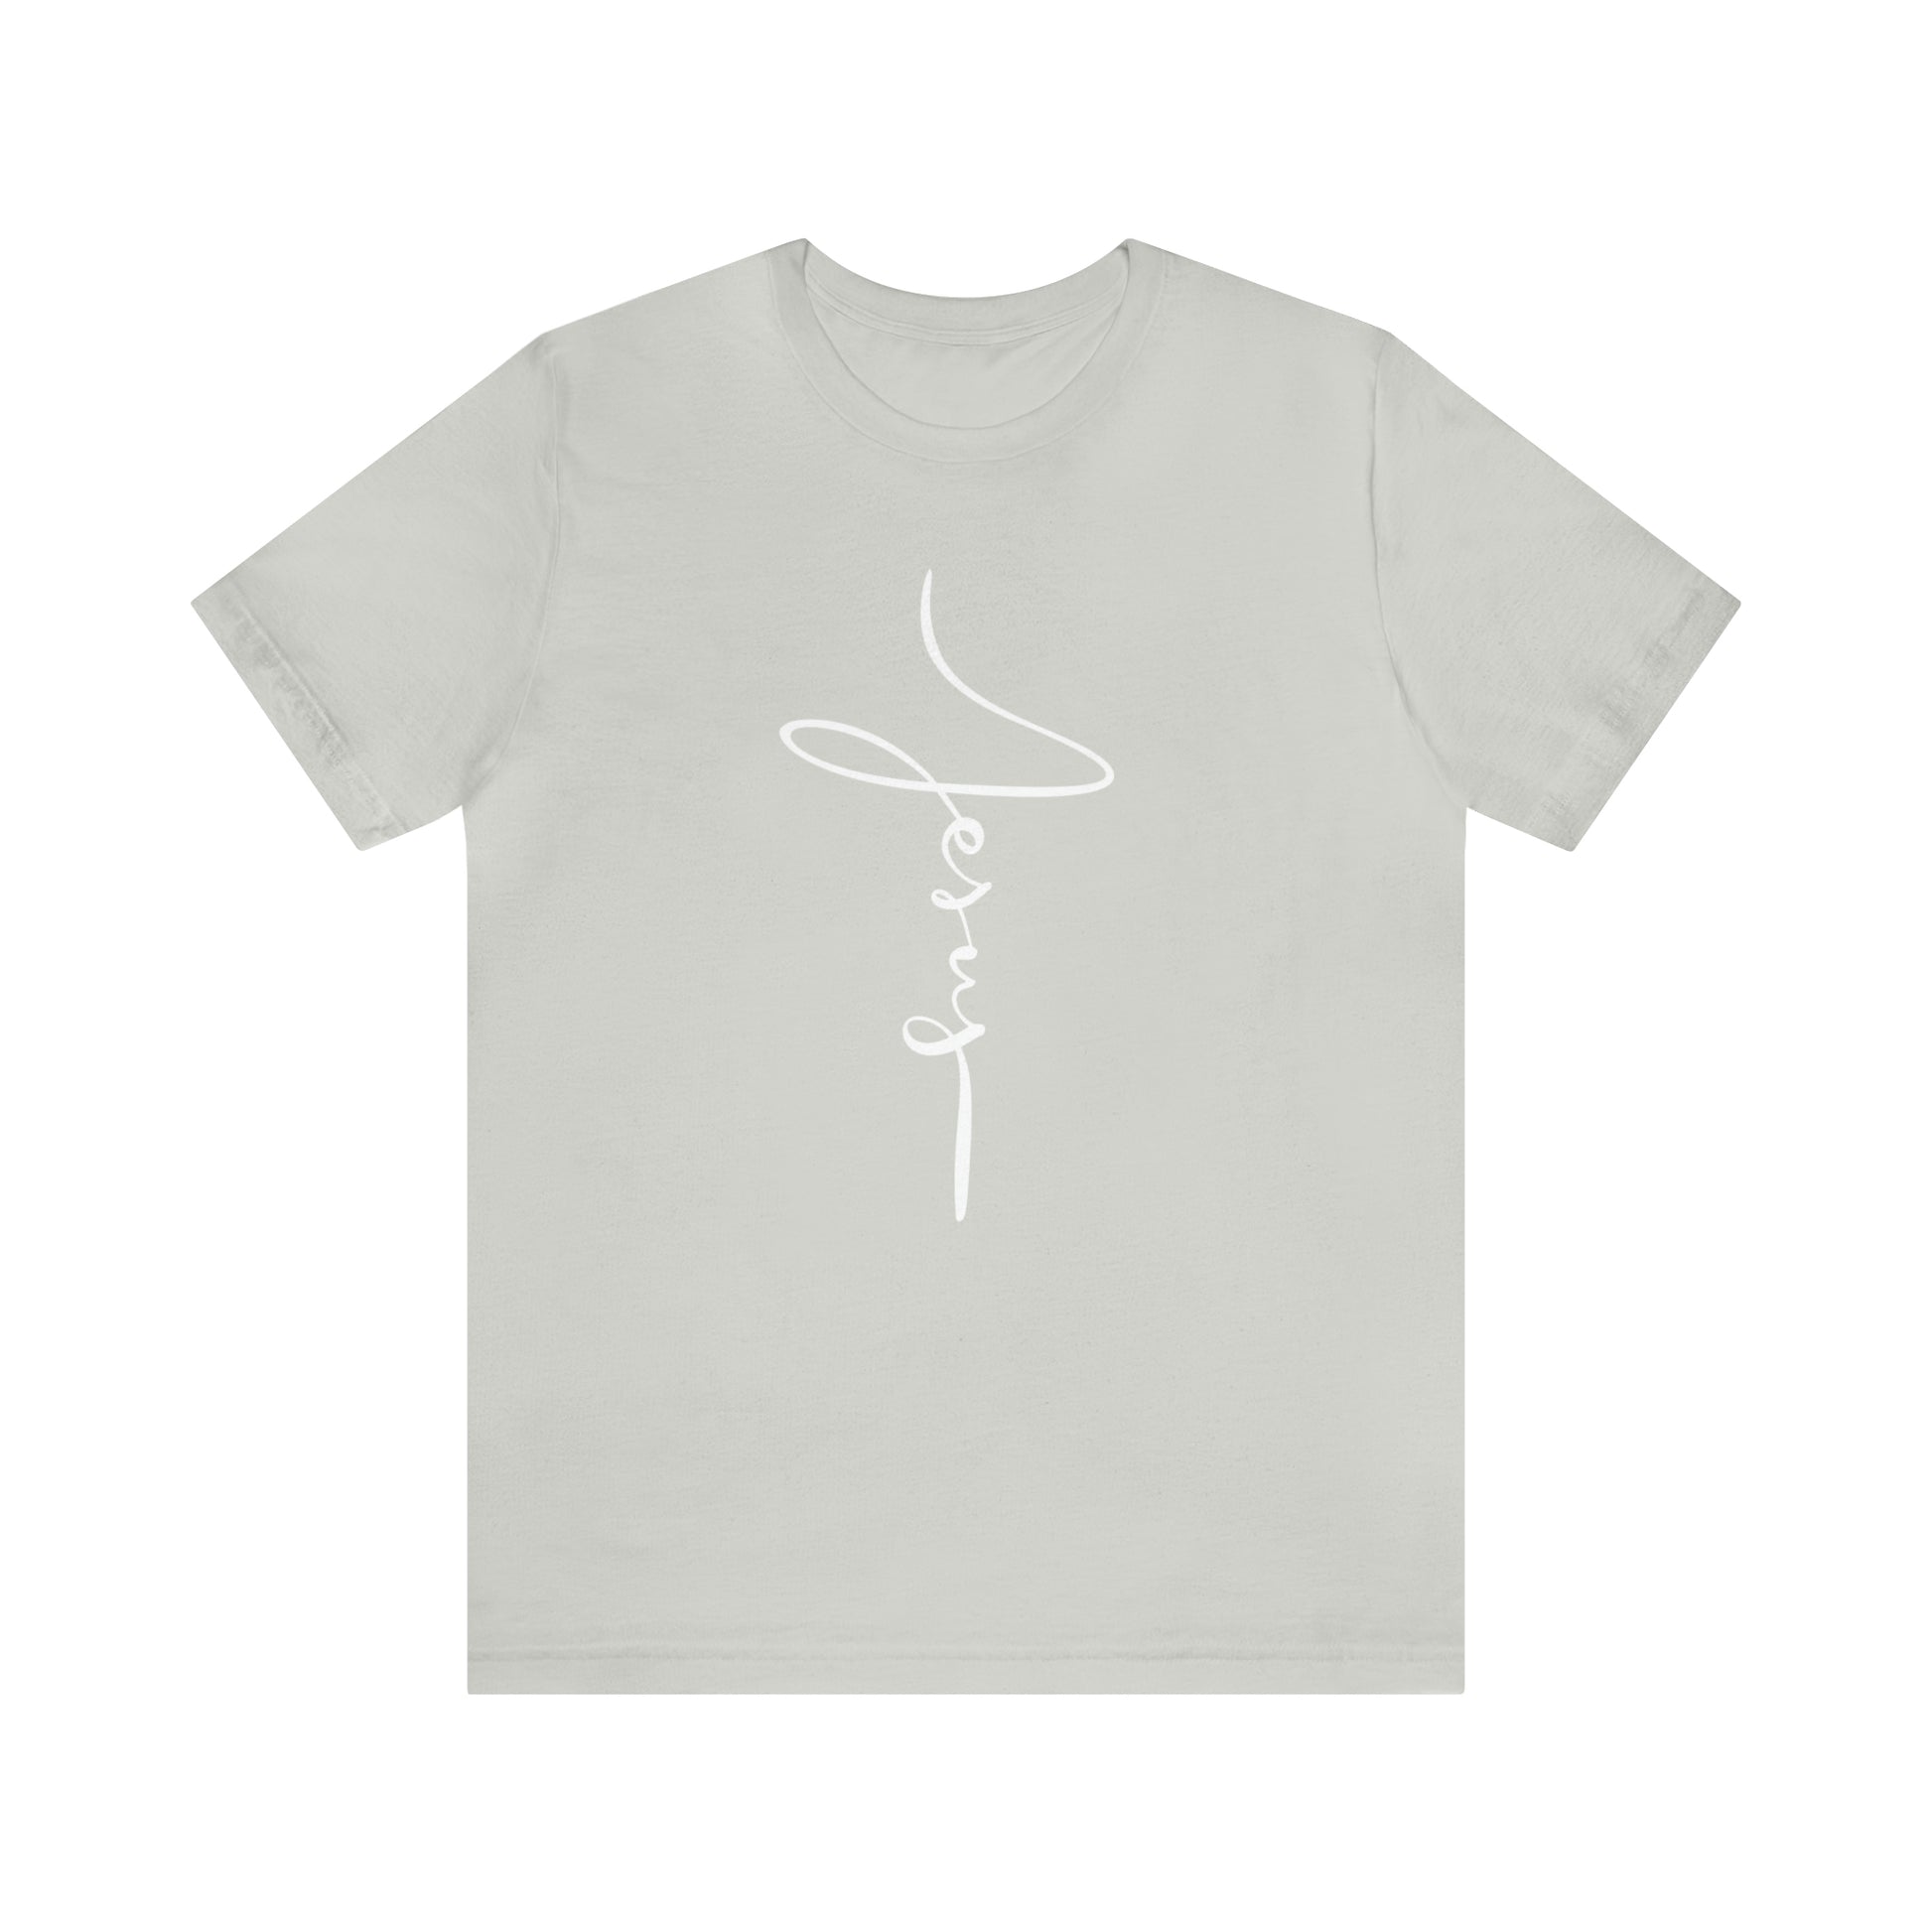 Jesus Cross Christian T-Shirt - Cursive White Font Neutral Color Tees Silver flatlay